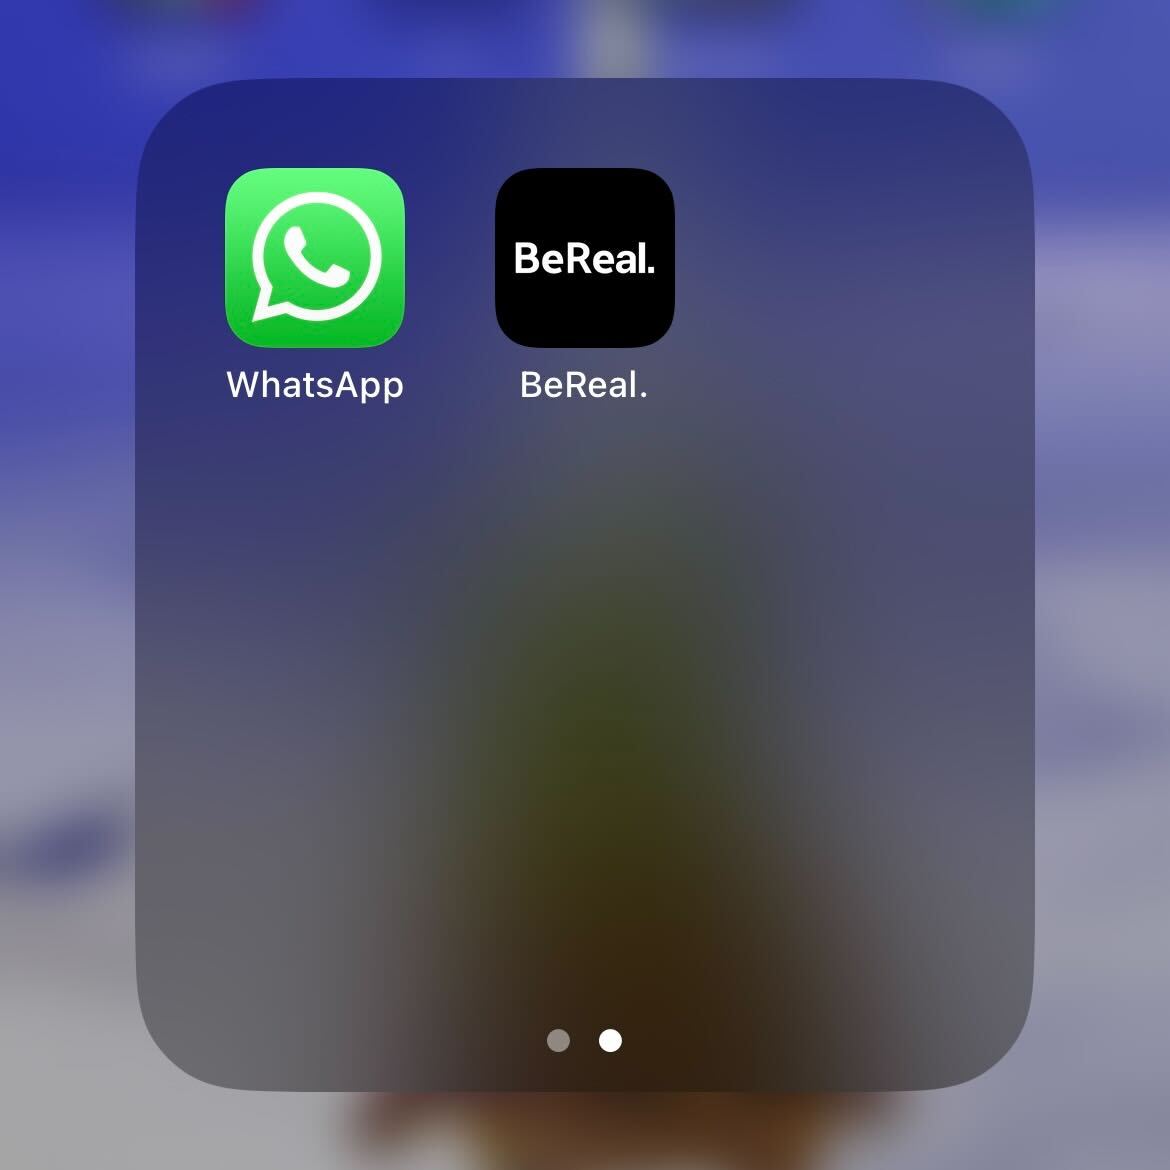 The Whatsapp app